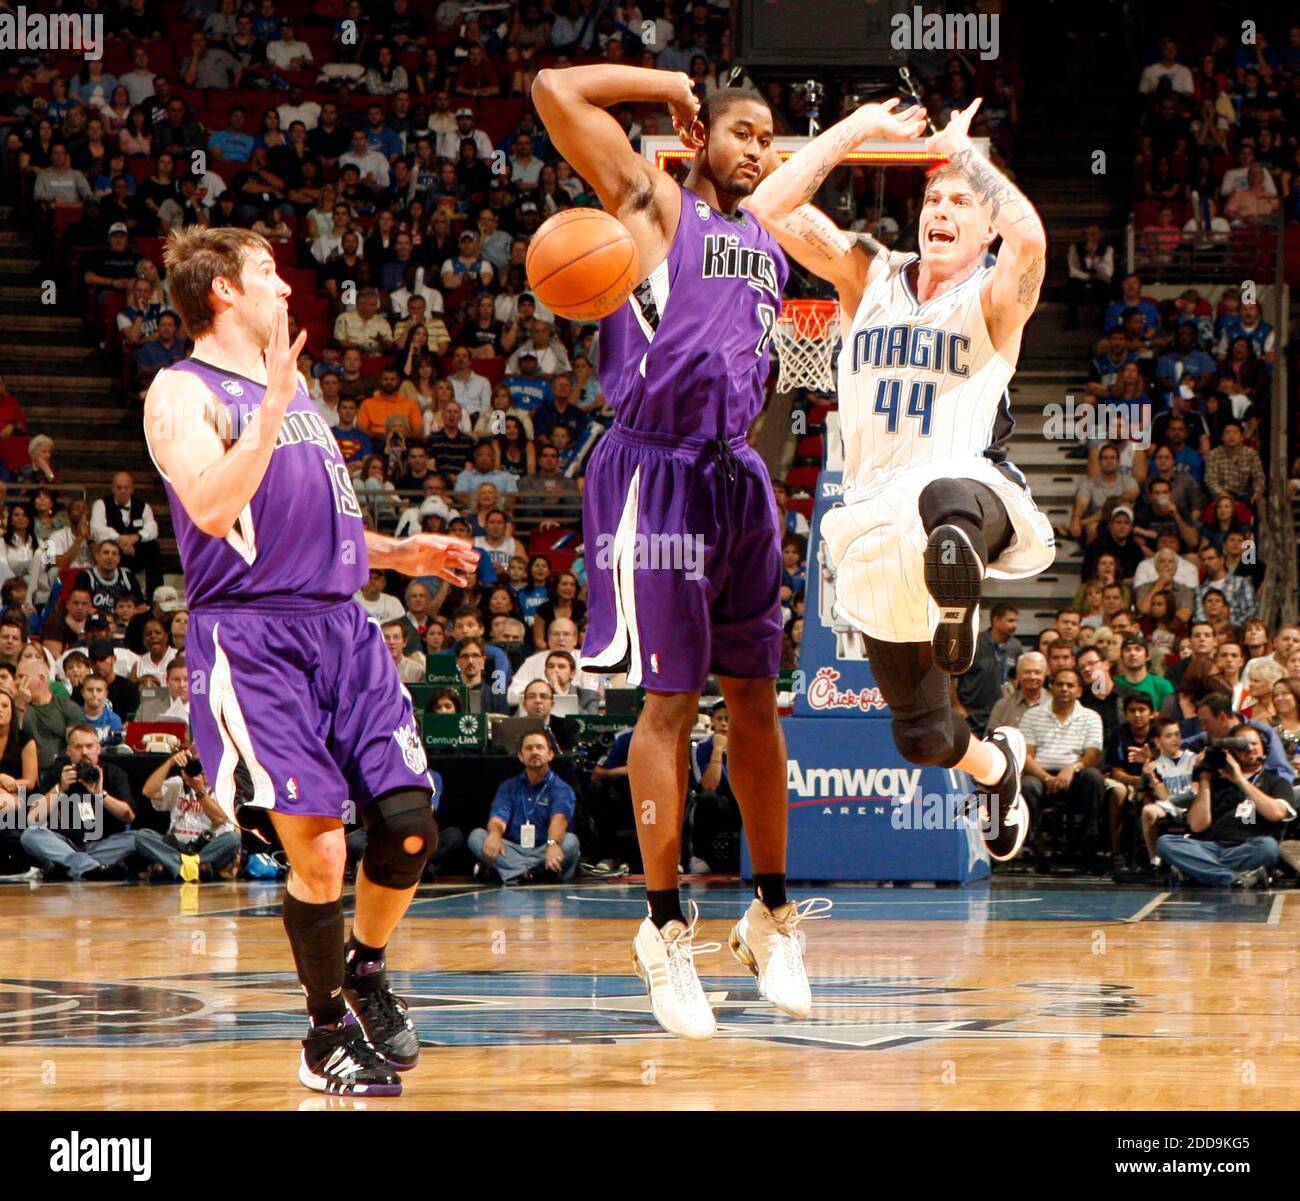 Free download Jason Williams Sacramento Kings Basketball NBA